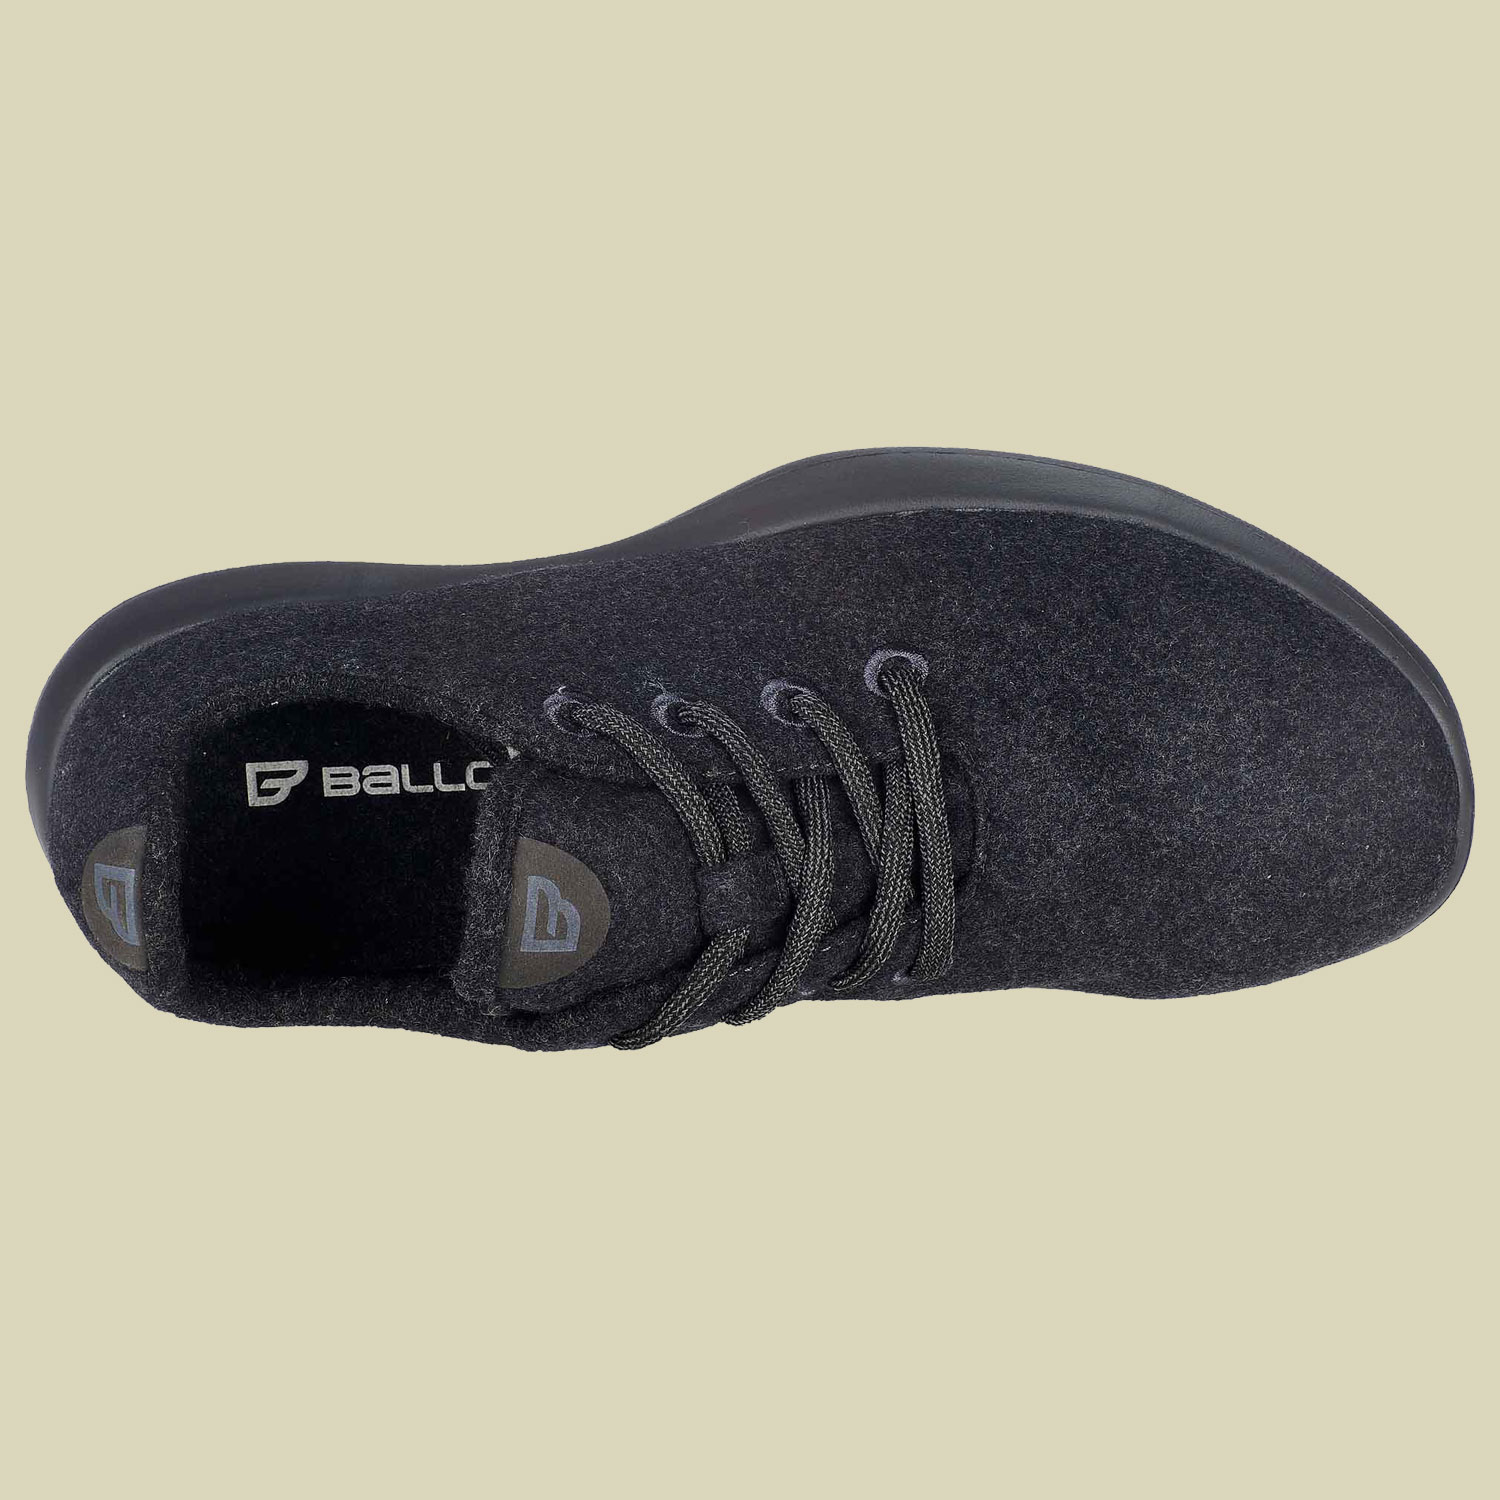 Tenderness Woll-Sneaker Größe 42 Farbe black